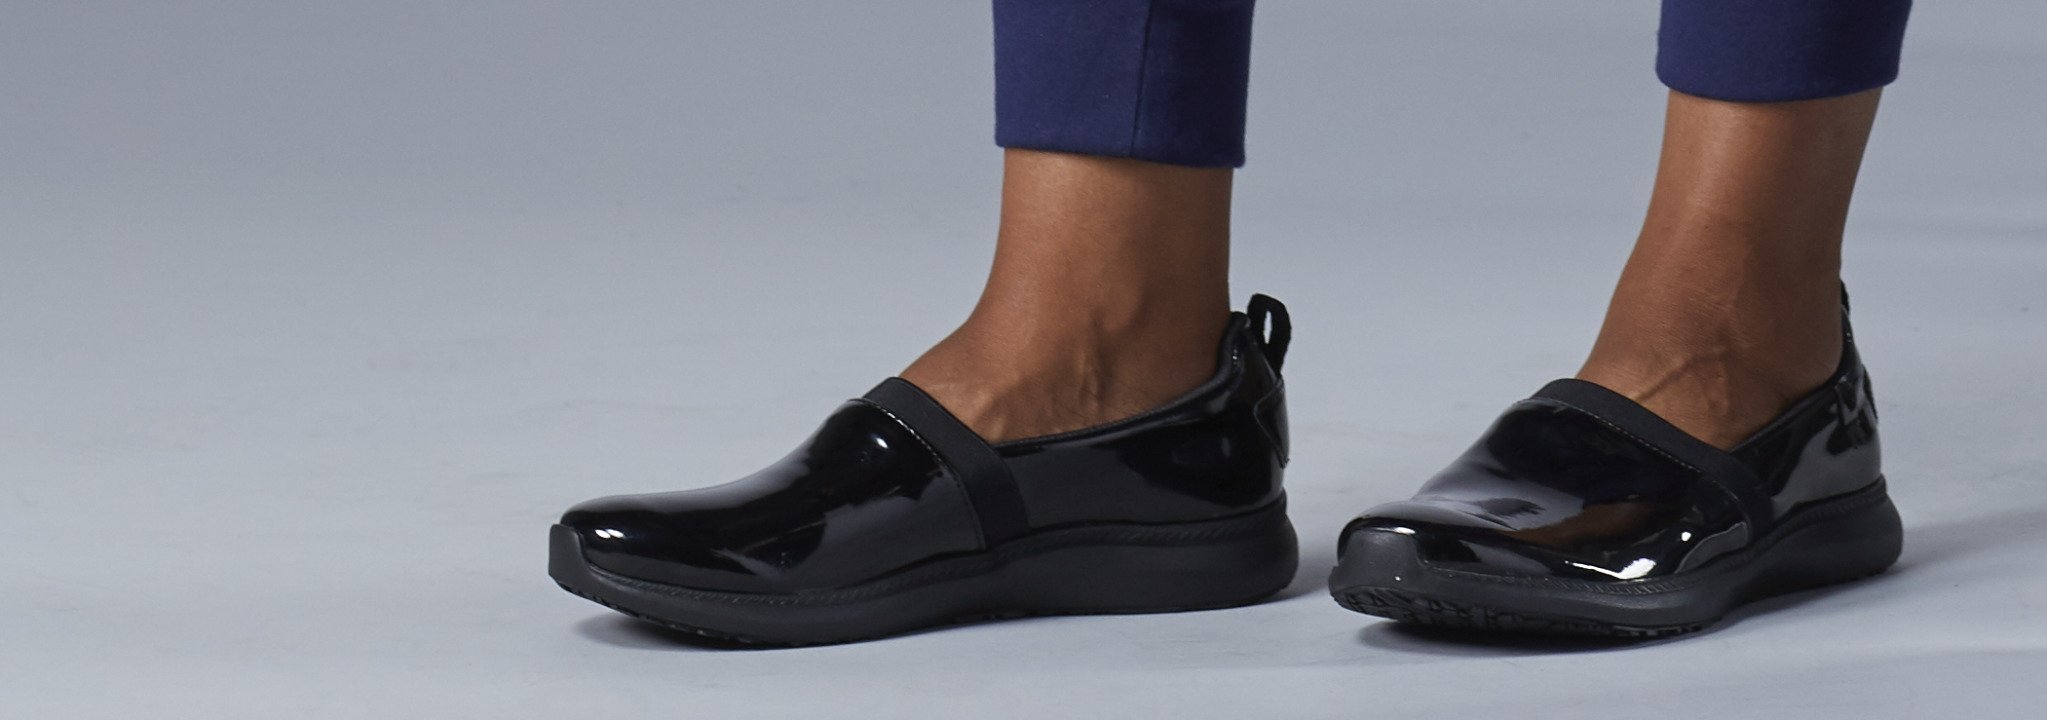 vionic slip resistant work shoes